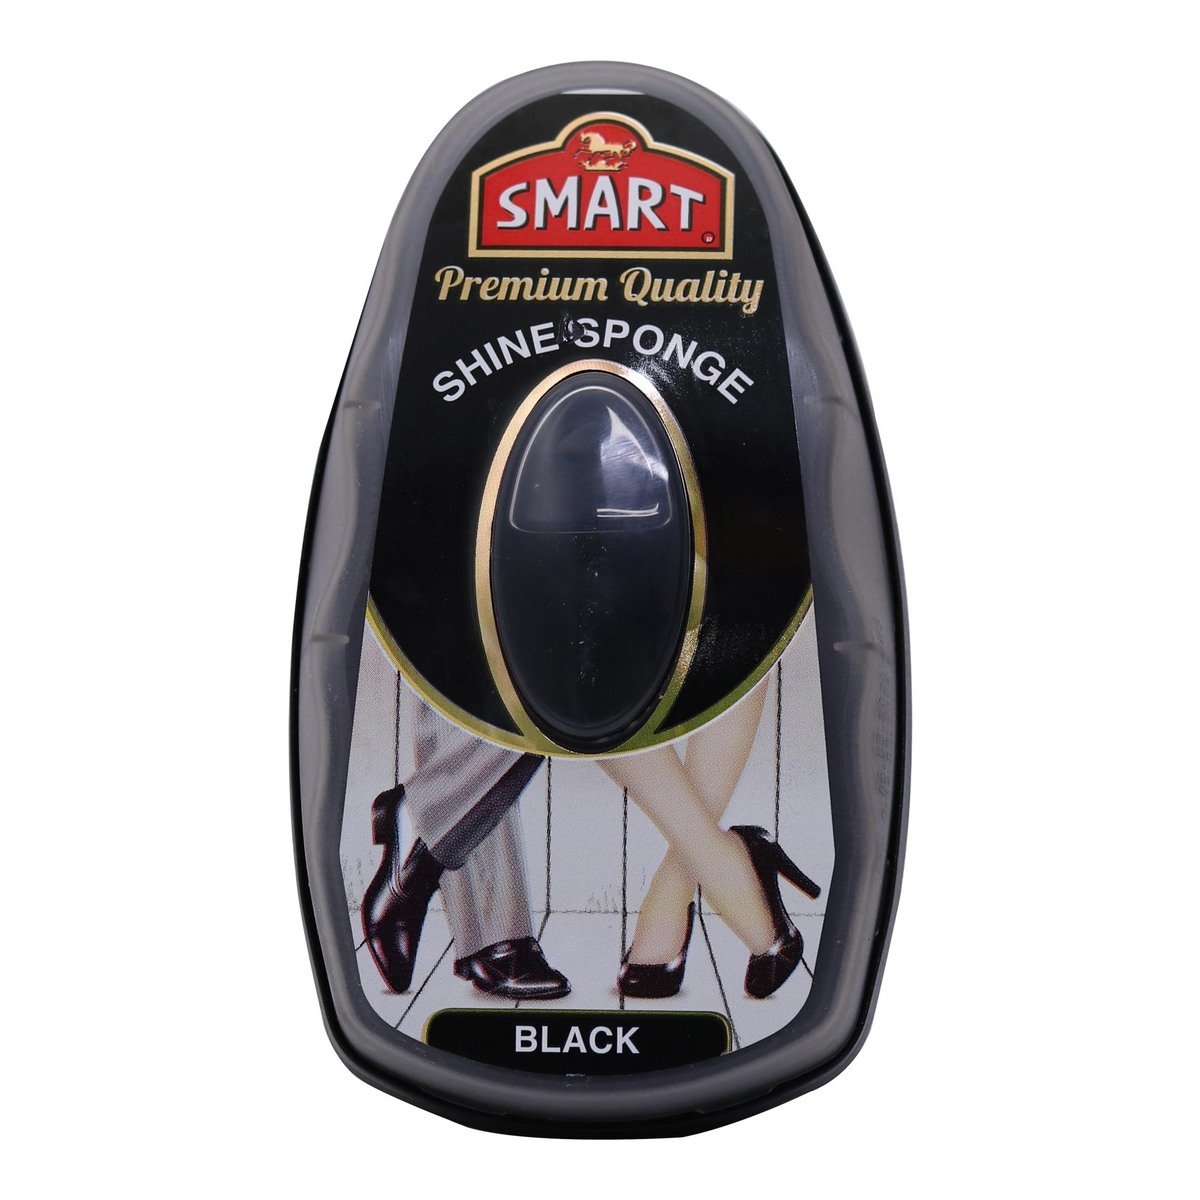 Smart Premium Shine Sponge Black 8ml